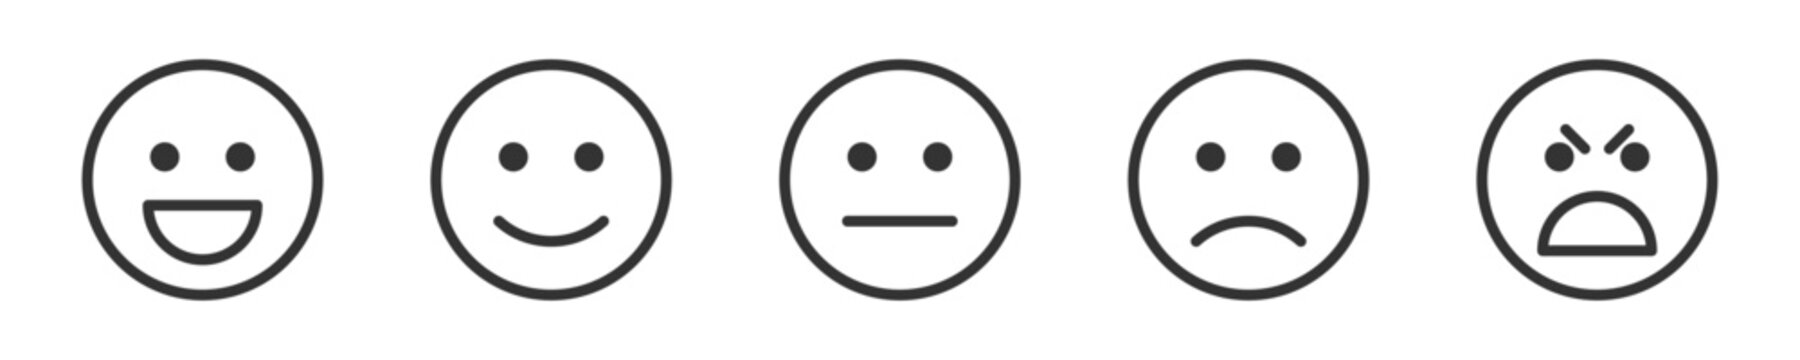 Naklejki Feedback emotions icon. Happiness, smile, frustration, discontent, angry emoji symbols. Smileys black icons set. Vector stock illustration.